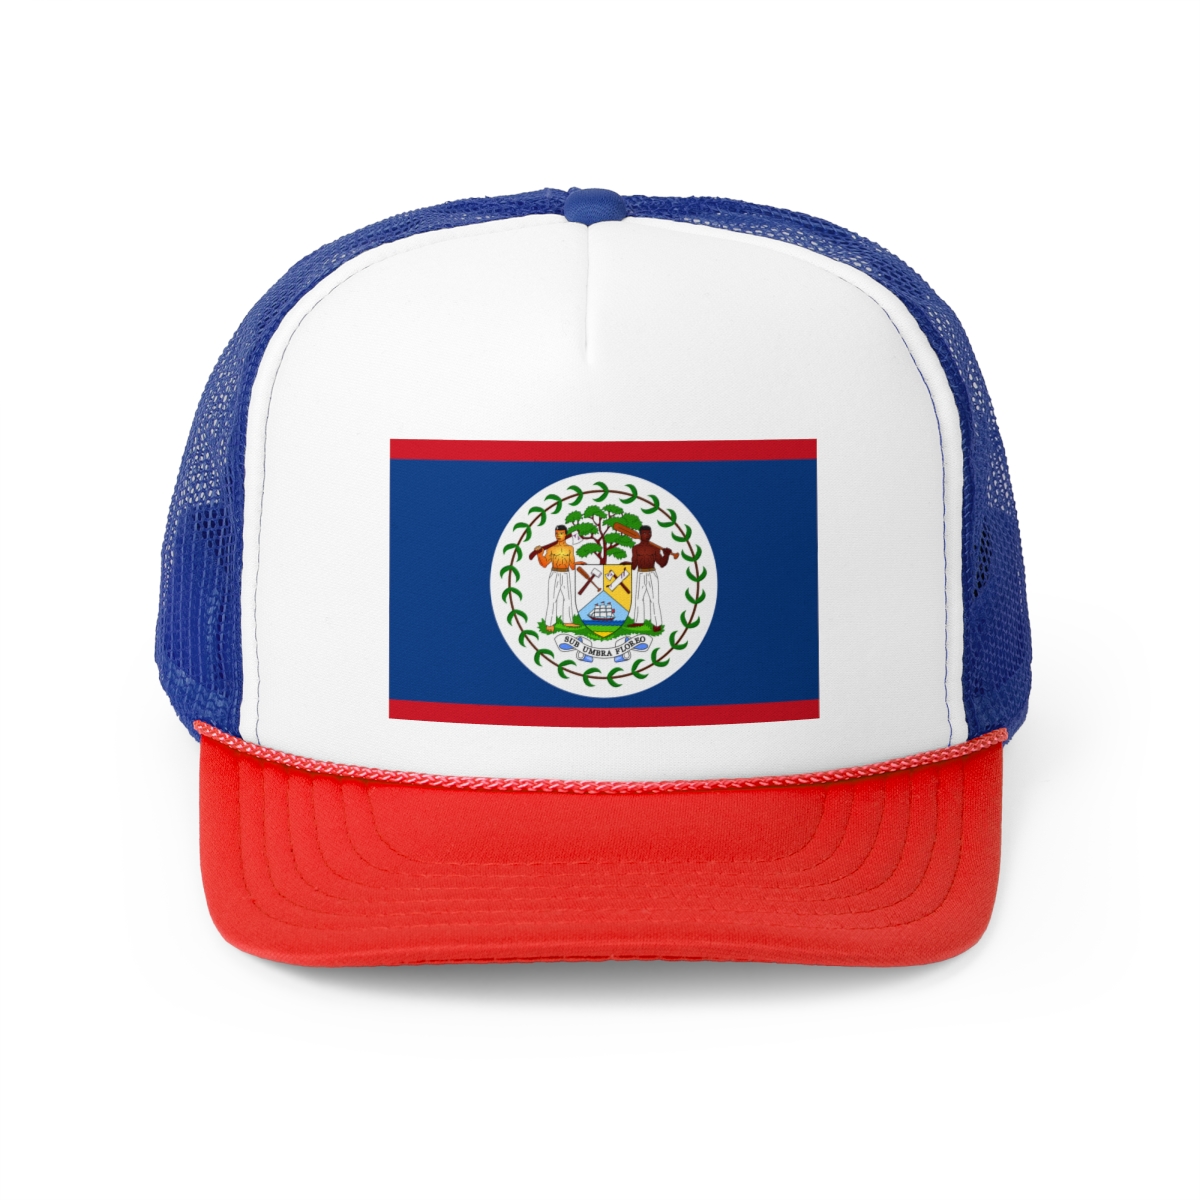 Belize Flag Trucker Cap product thumbnail image